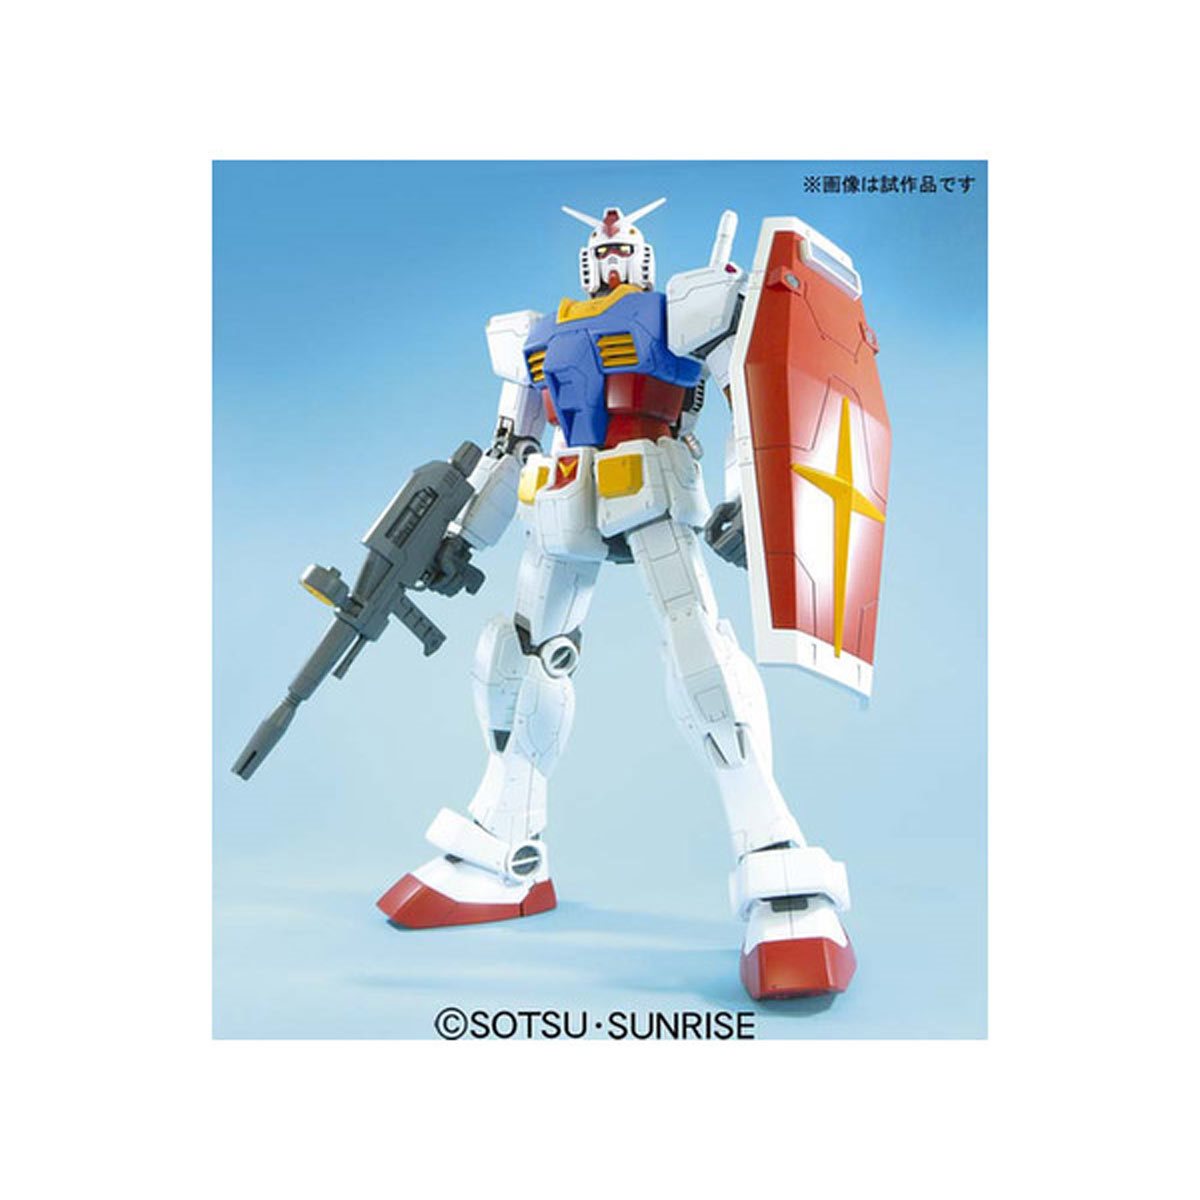 Mobile Suit Gundam RX-78-2 Gundam Mega Size 1:48 Scale Model Kit